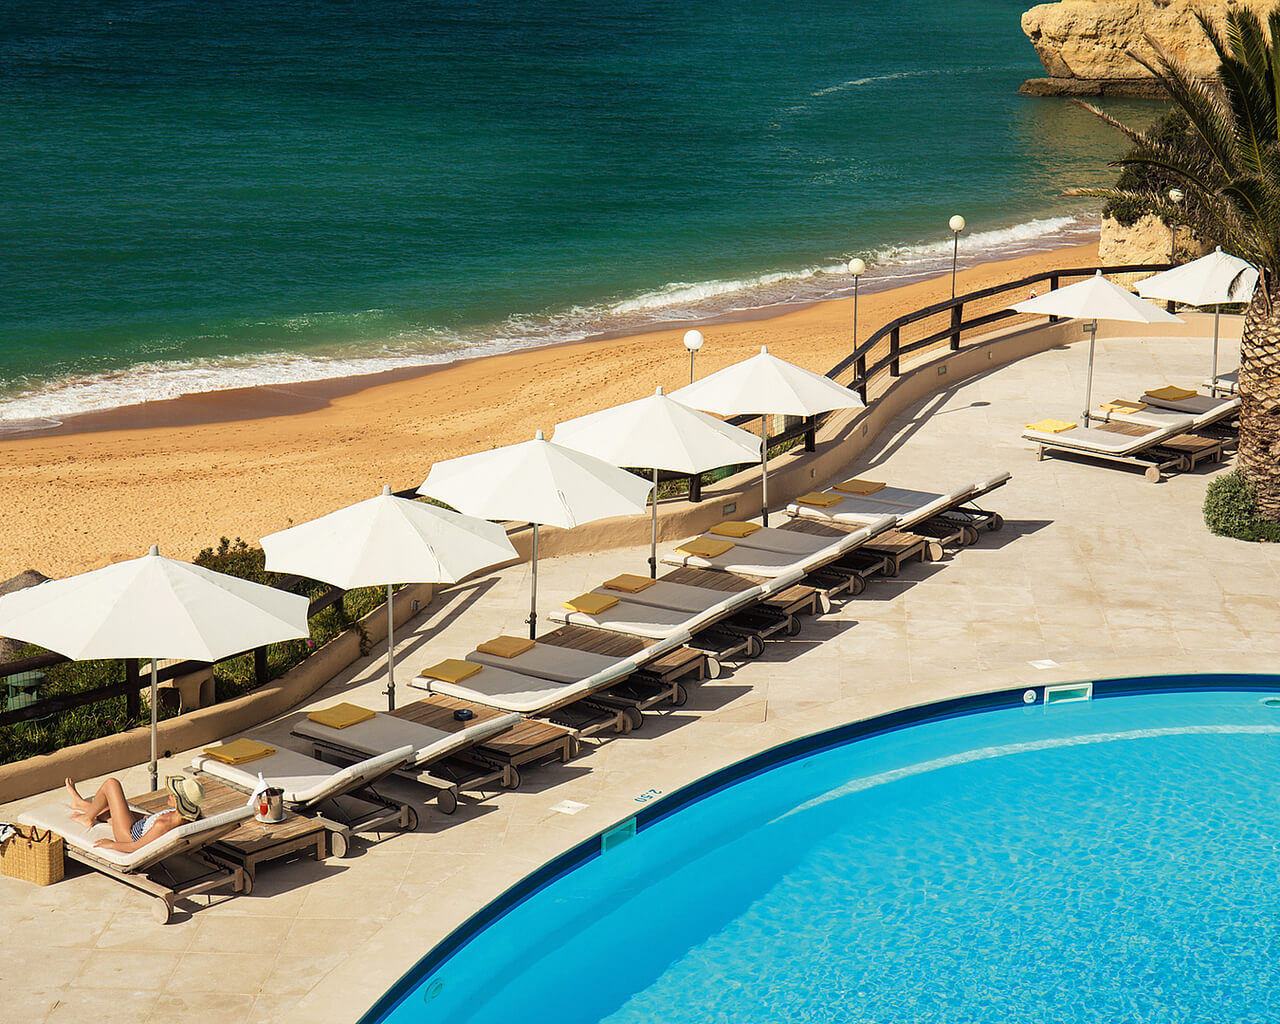 Séjour à l'hôtel Vilalara, plage, Algarve